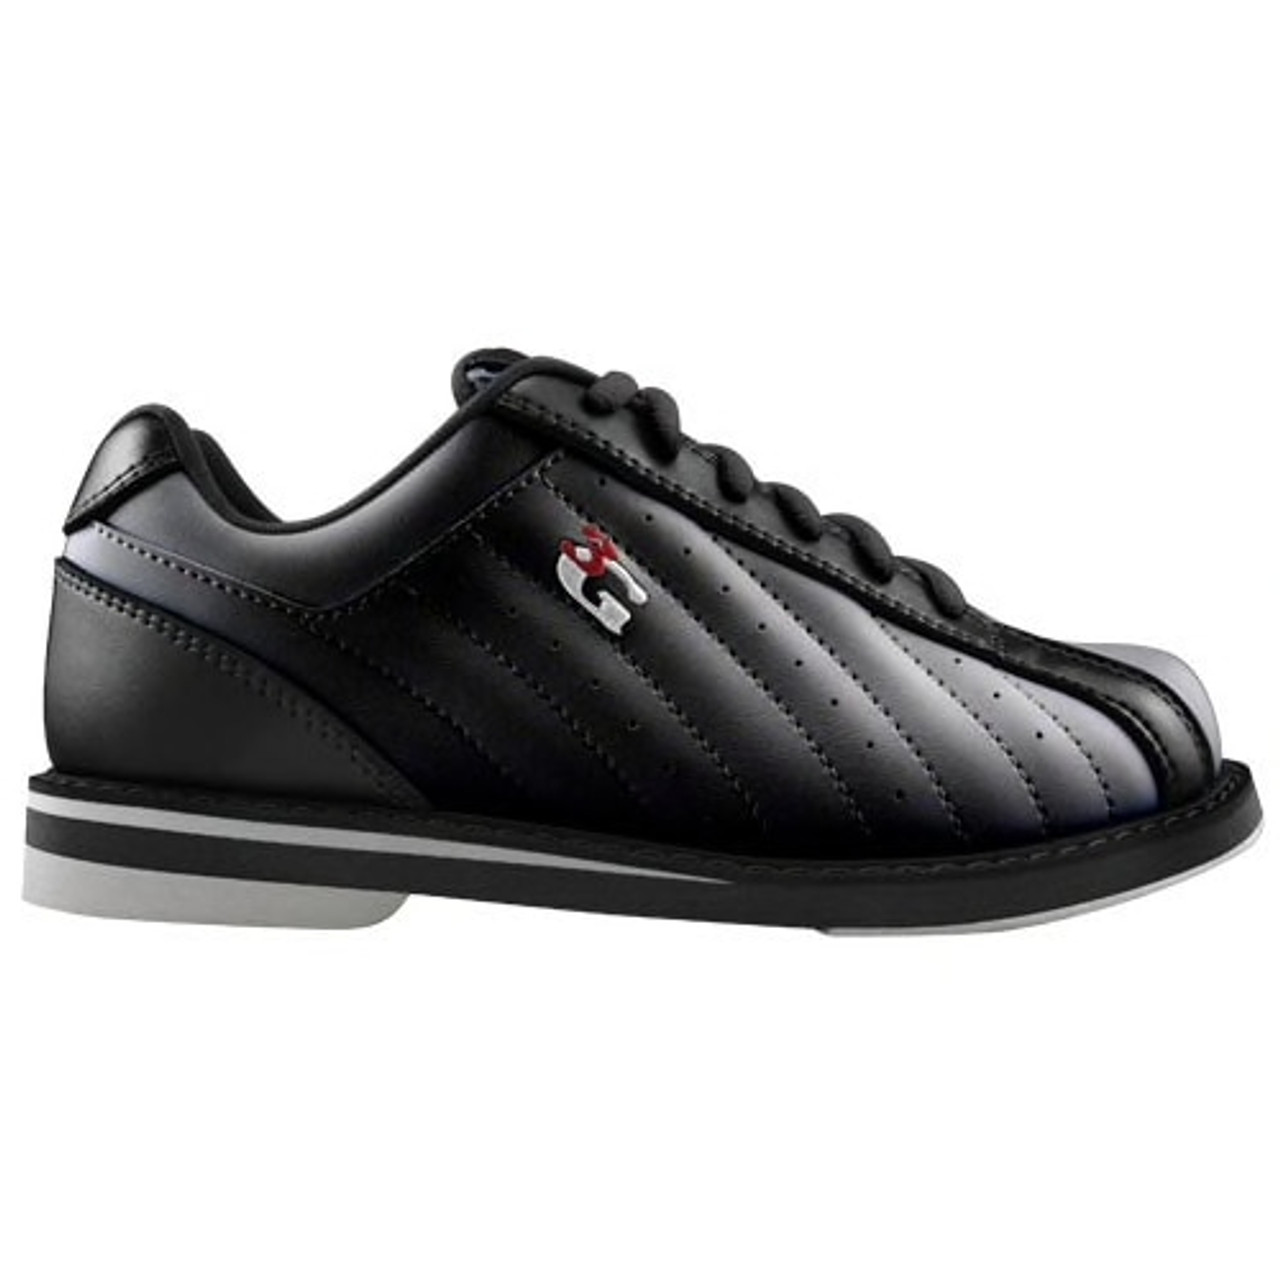 3G Kicks Boys Bowling Shoes Black